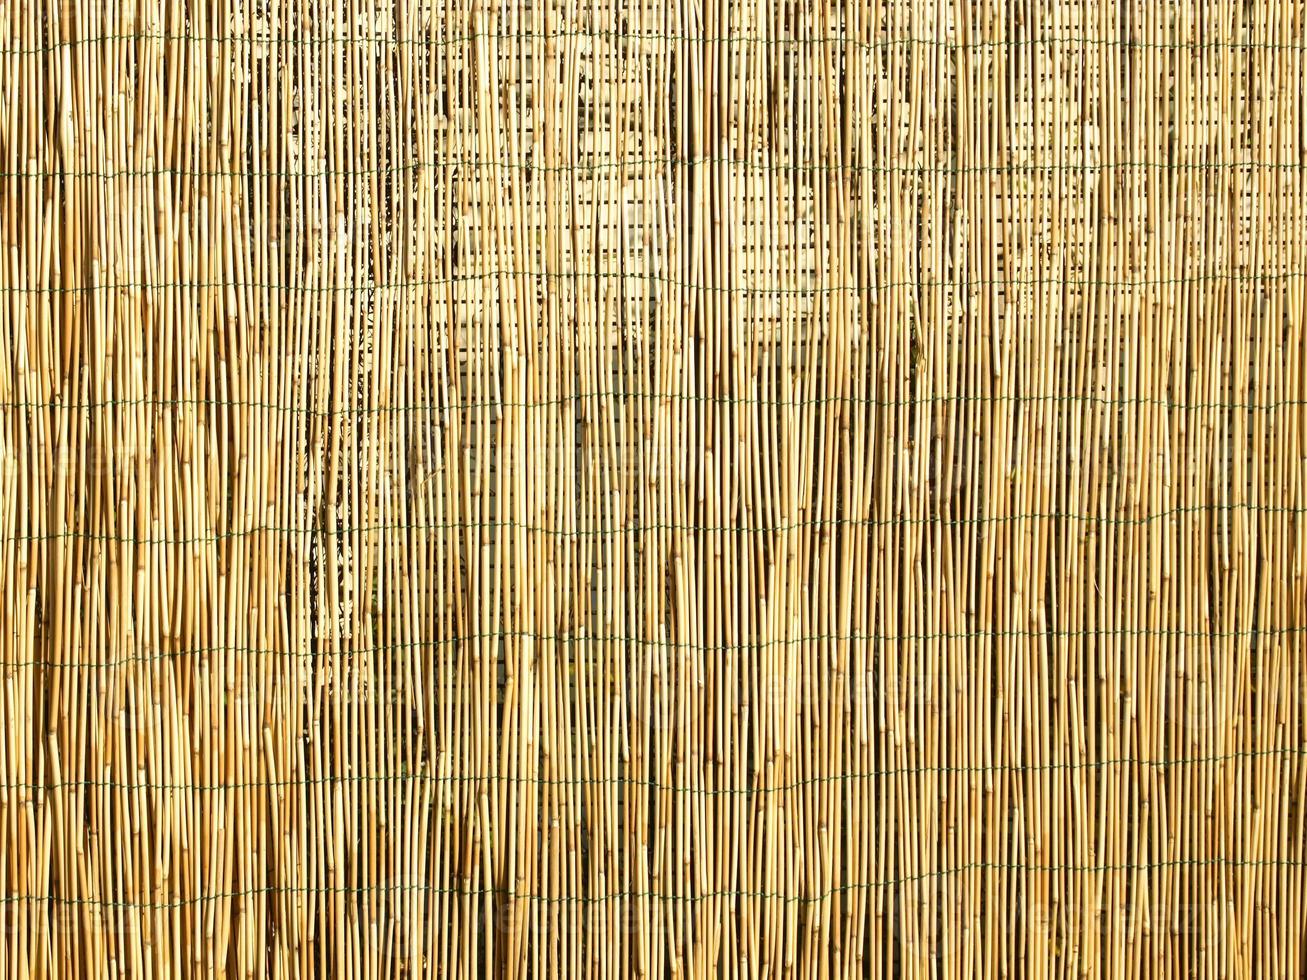 textura de madera de bambú foto